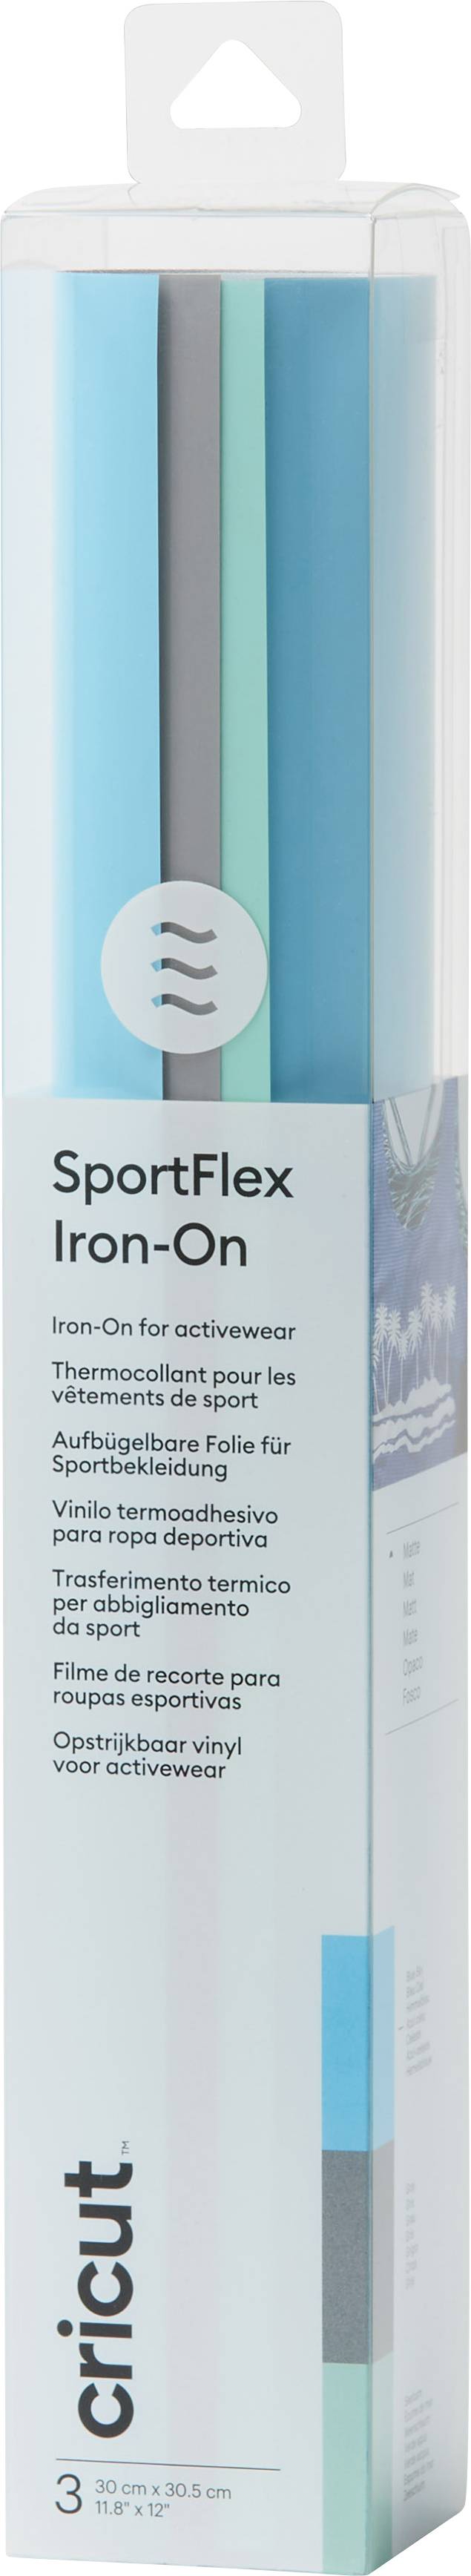 Buy Cricut SportFlex Iron-On Film Light blue, Grey, Turquoise